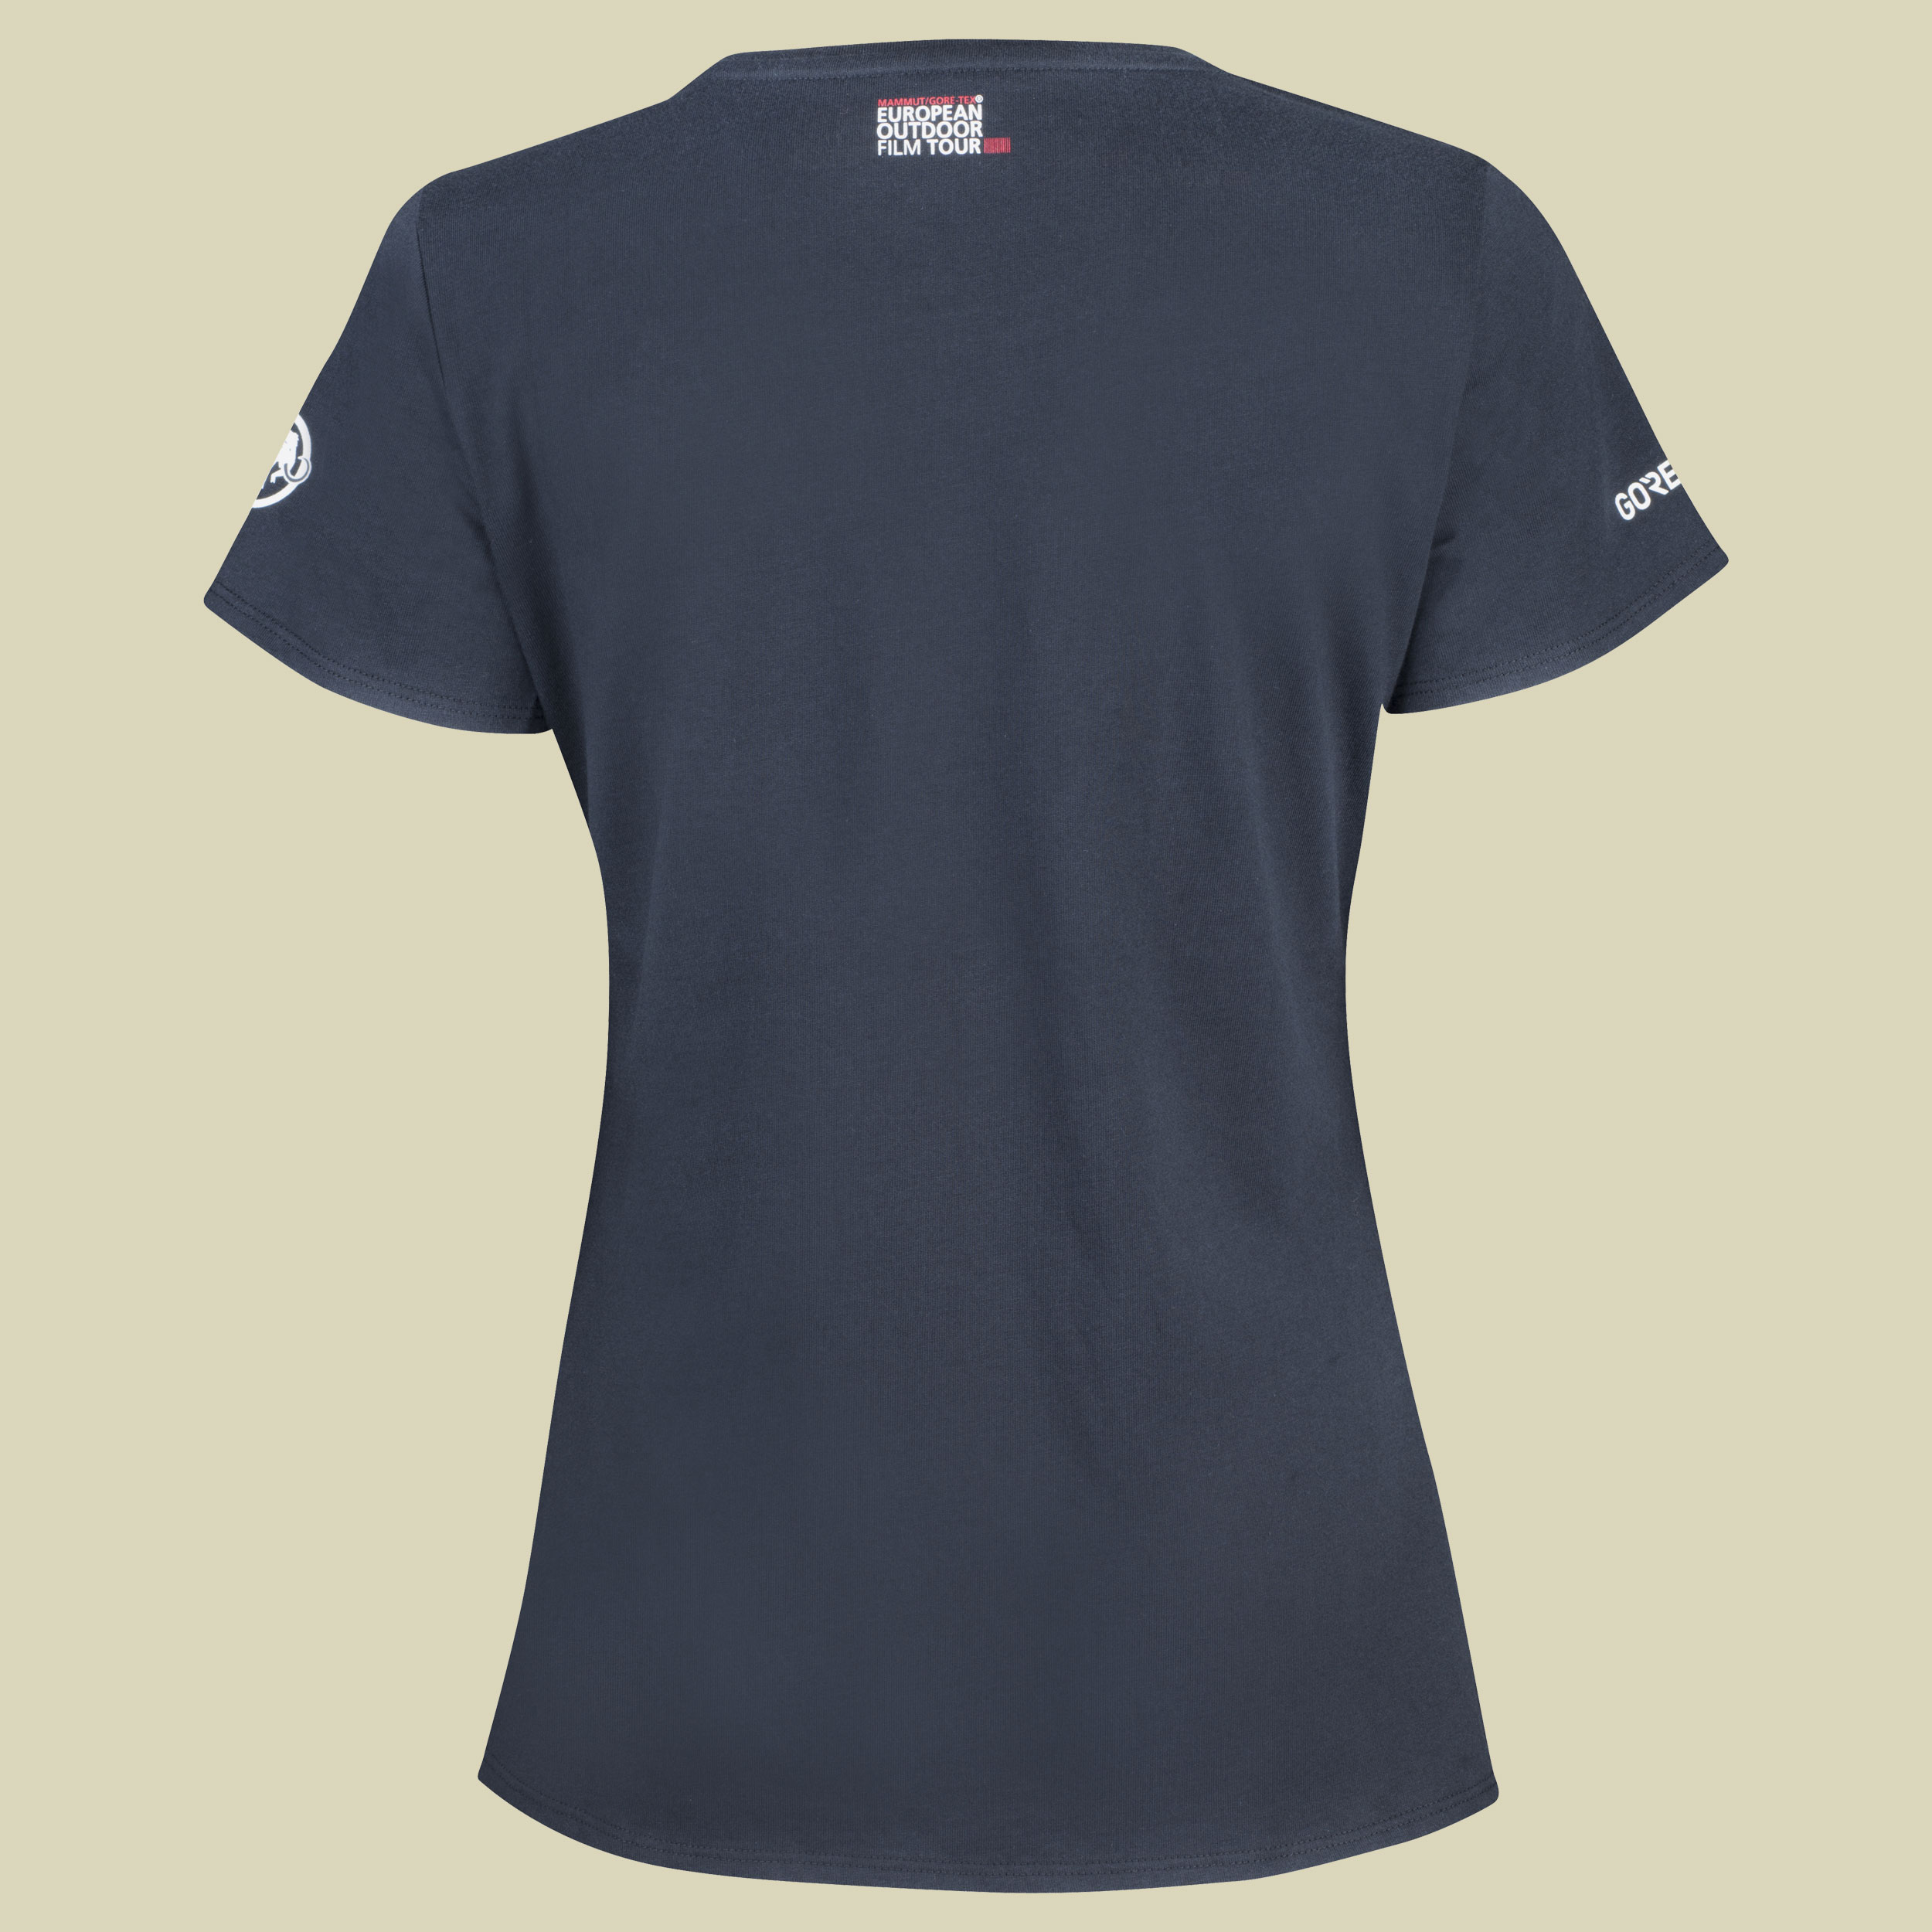 EOFT T-Shirt Women 2018/19 Größe XL Farbe black